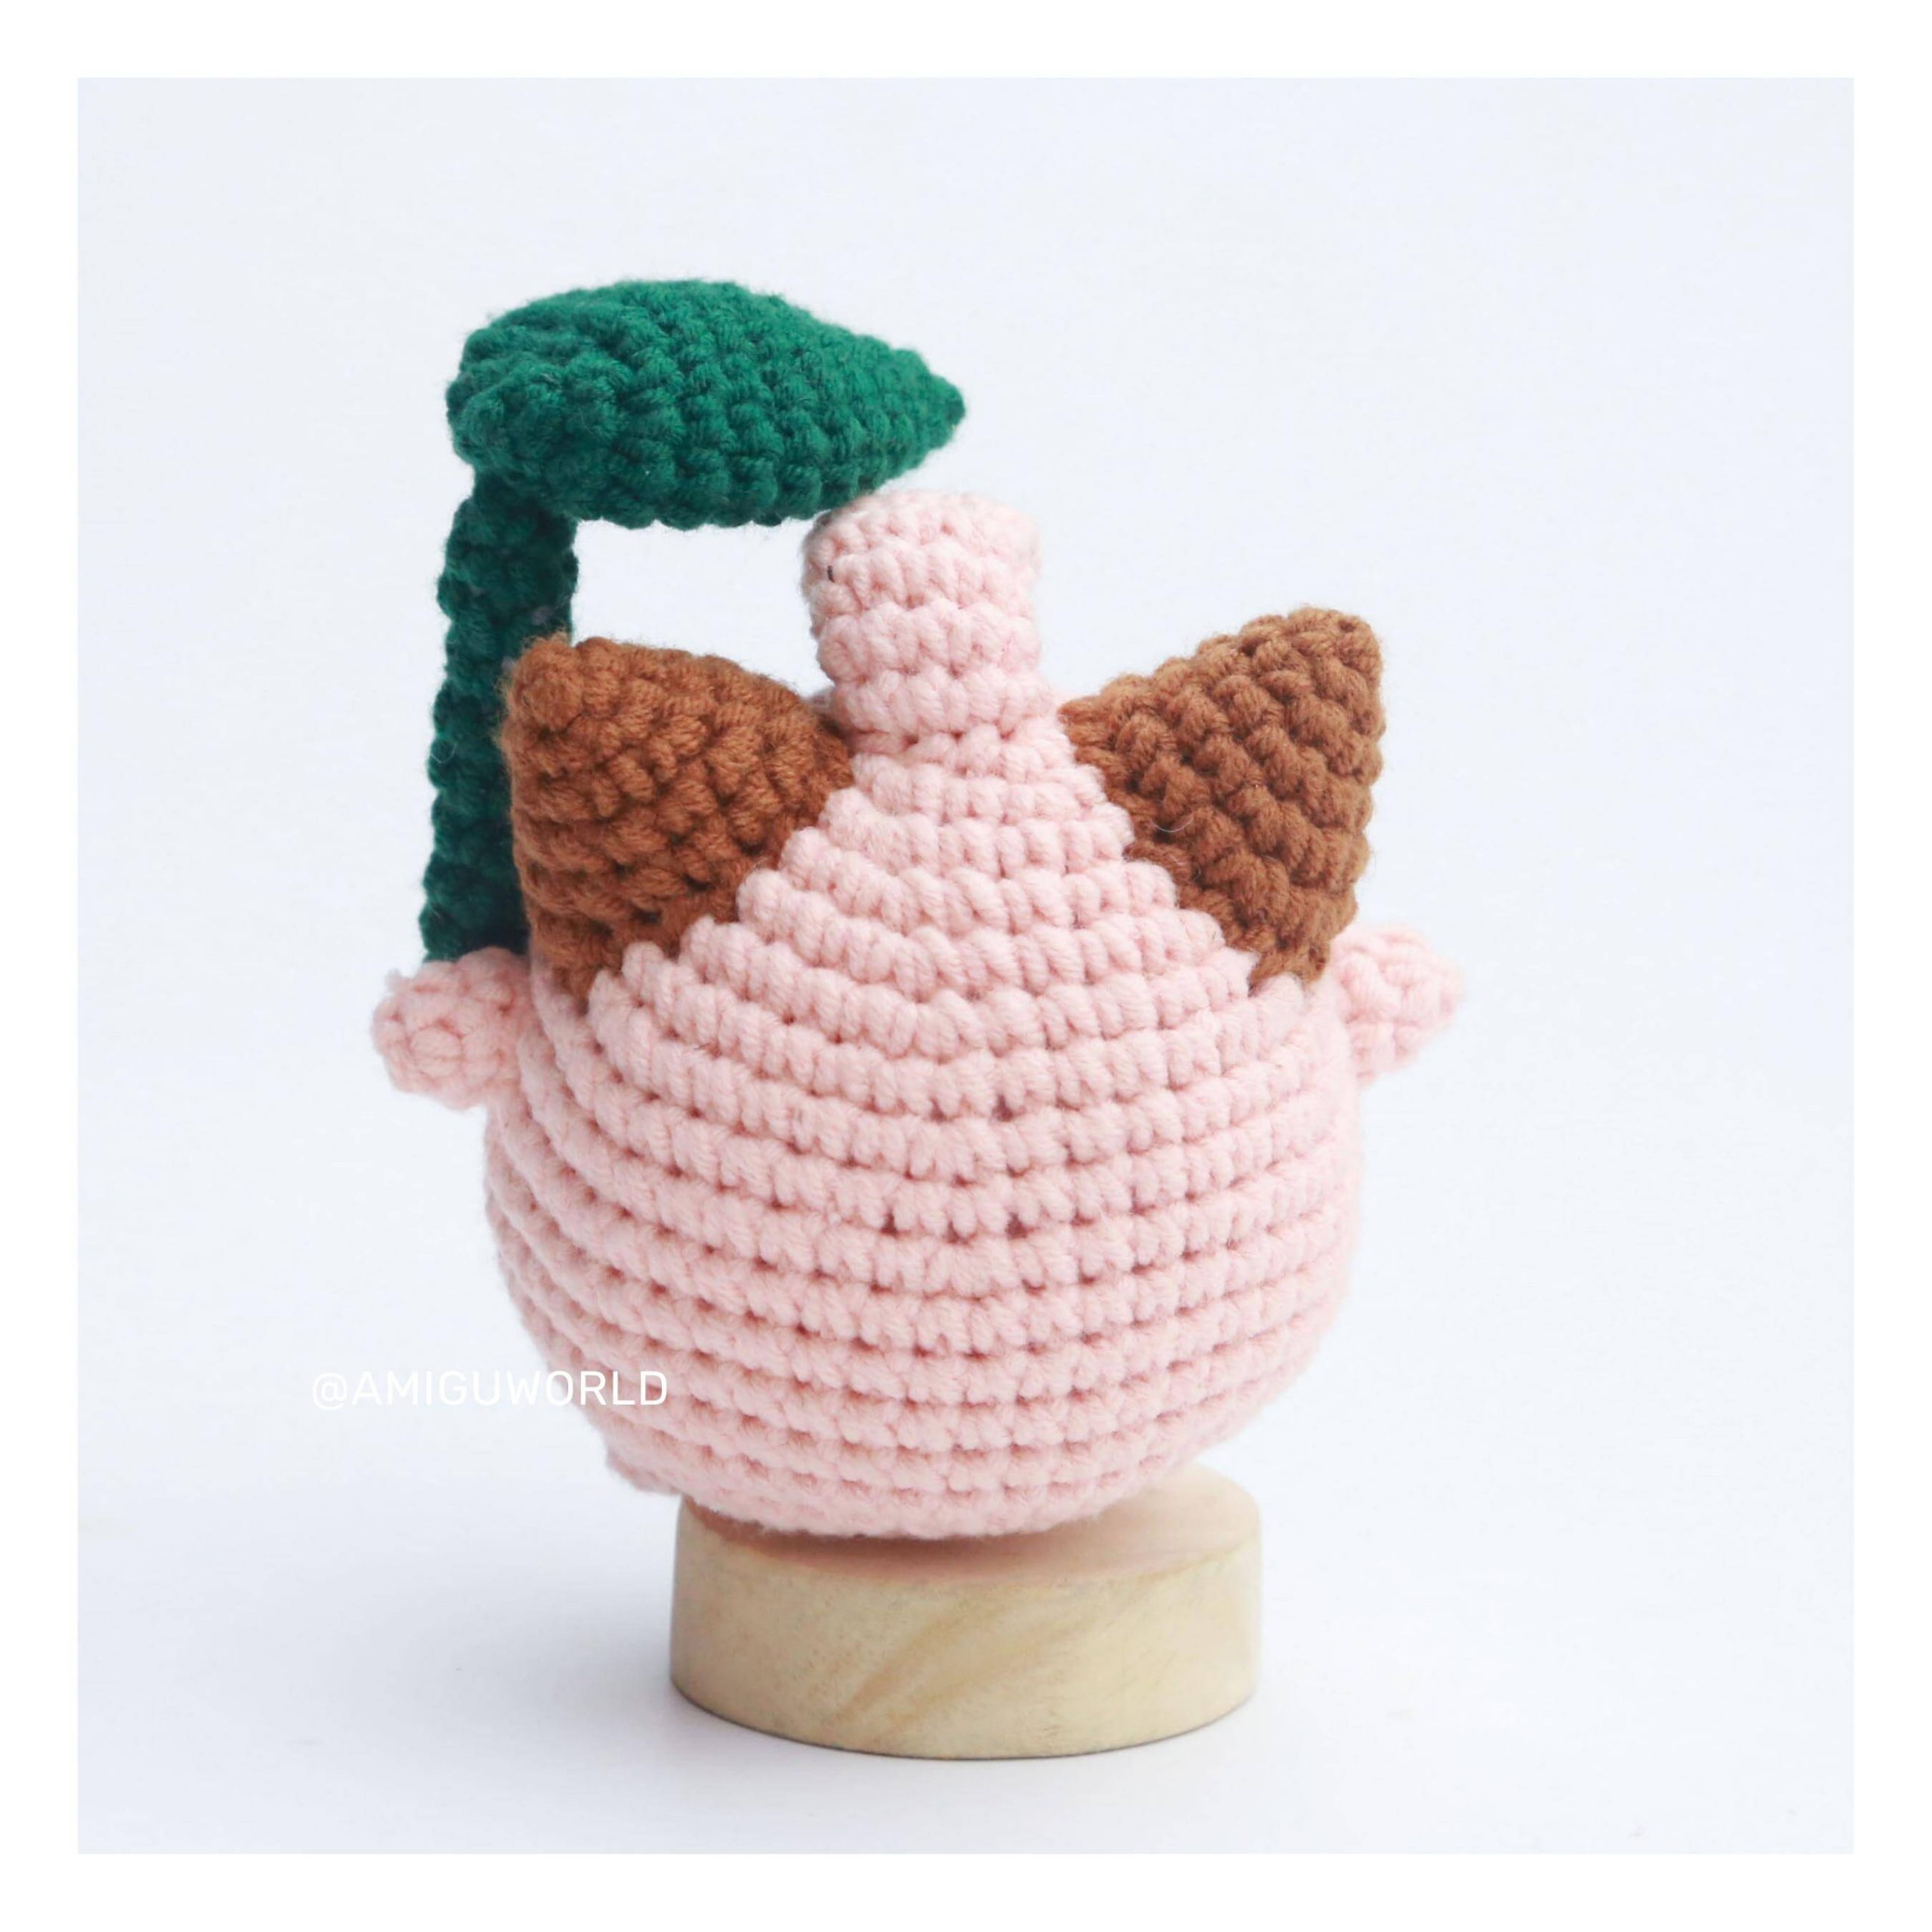 Cleffa-amigurumi-crochet-pattern-by-AmiguWorld (4)